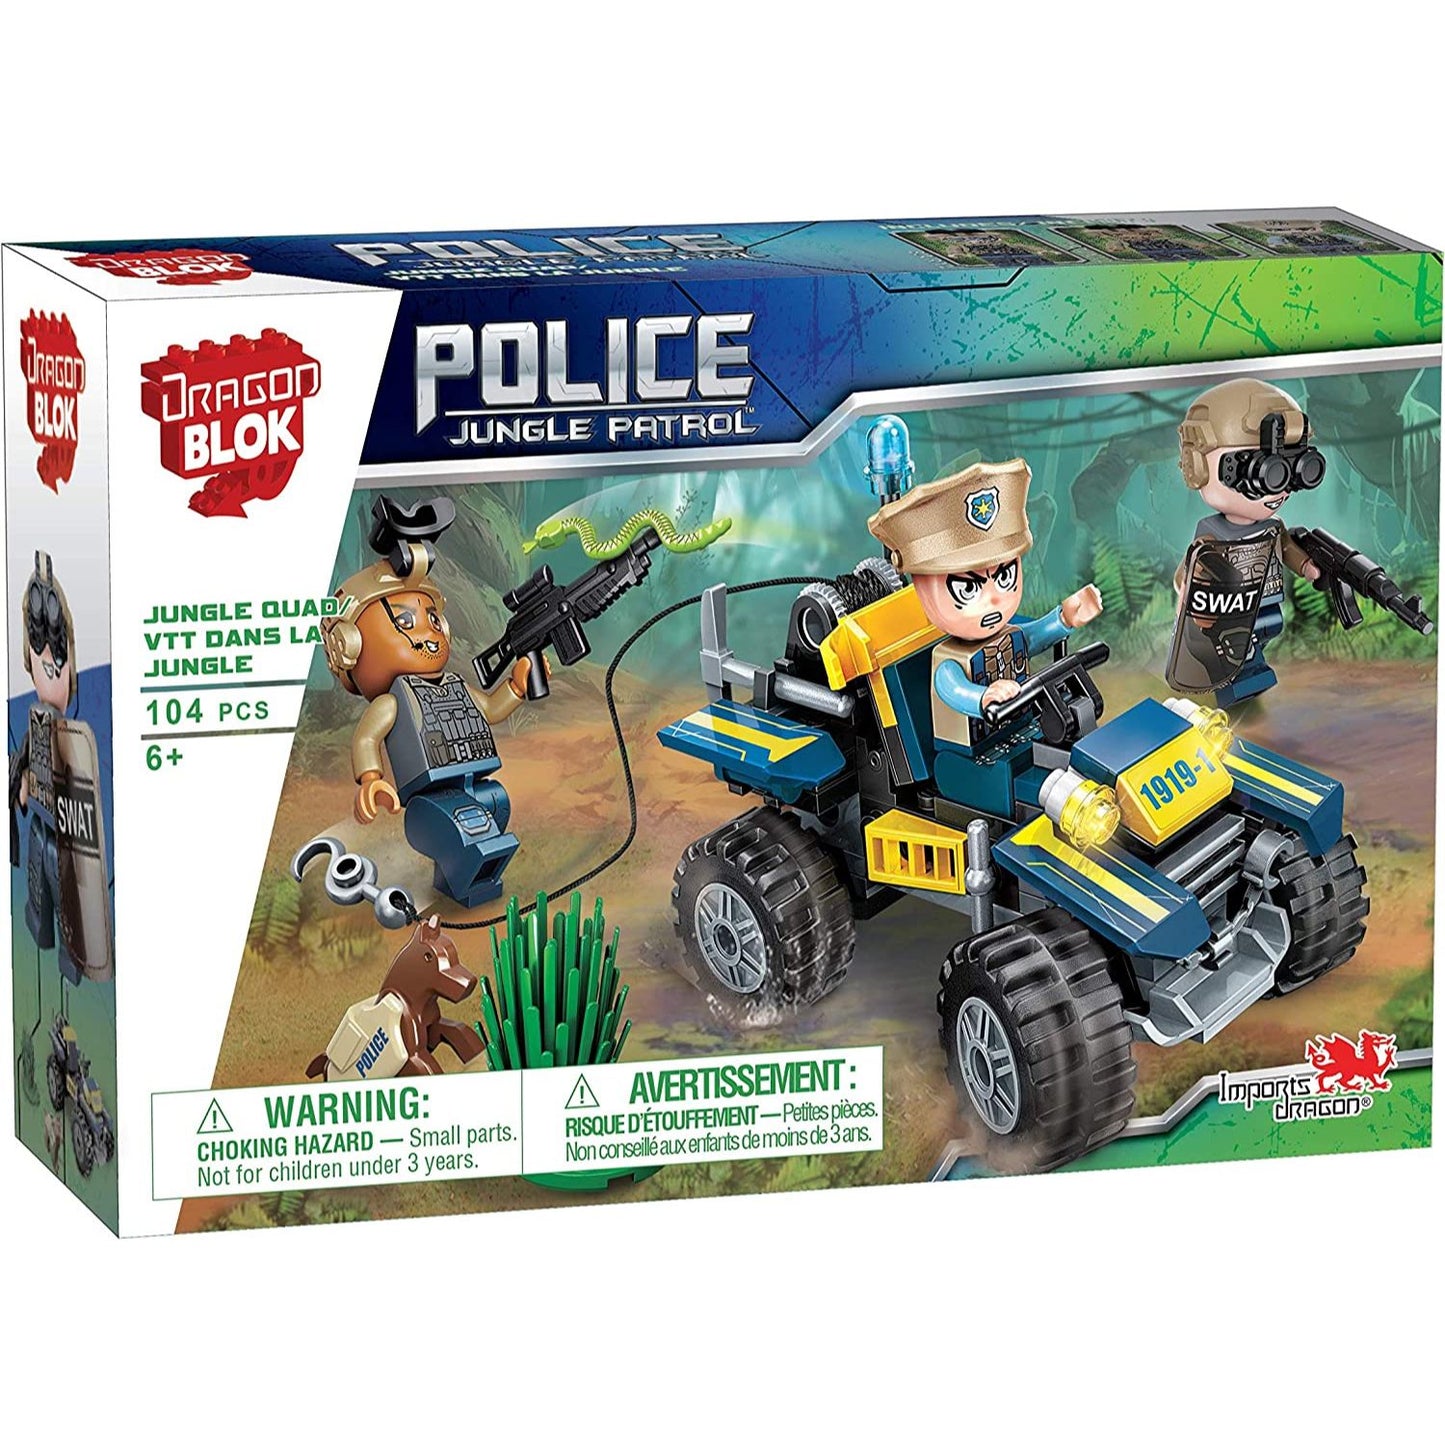 Dragon Blok - Jungle Quad - Police Jungle Patrol